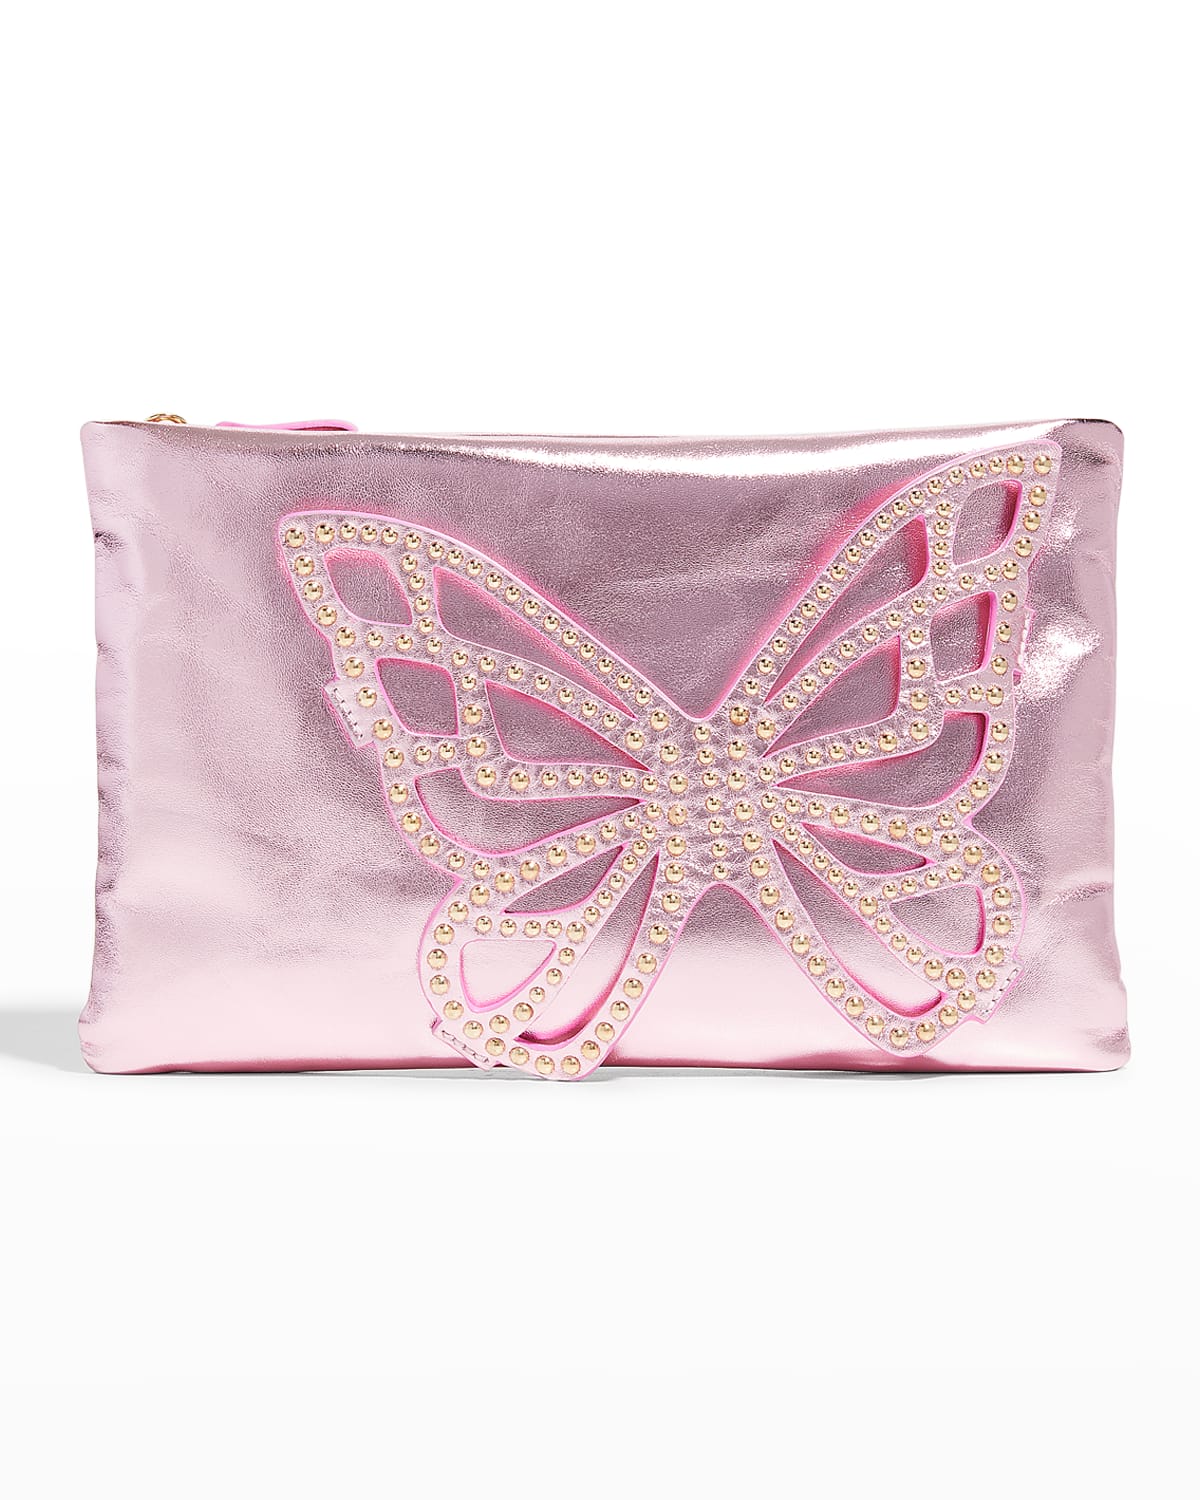 Sophia Webster Flossy Studded Butterfly Metallic Clutch Bag In Rosa Silver